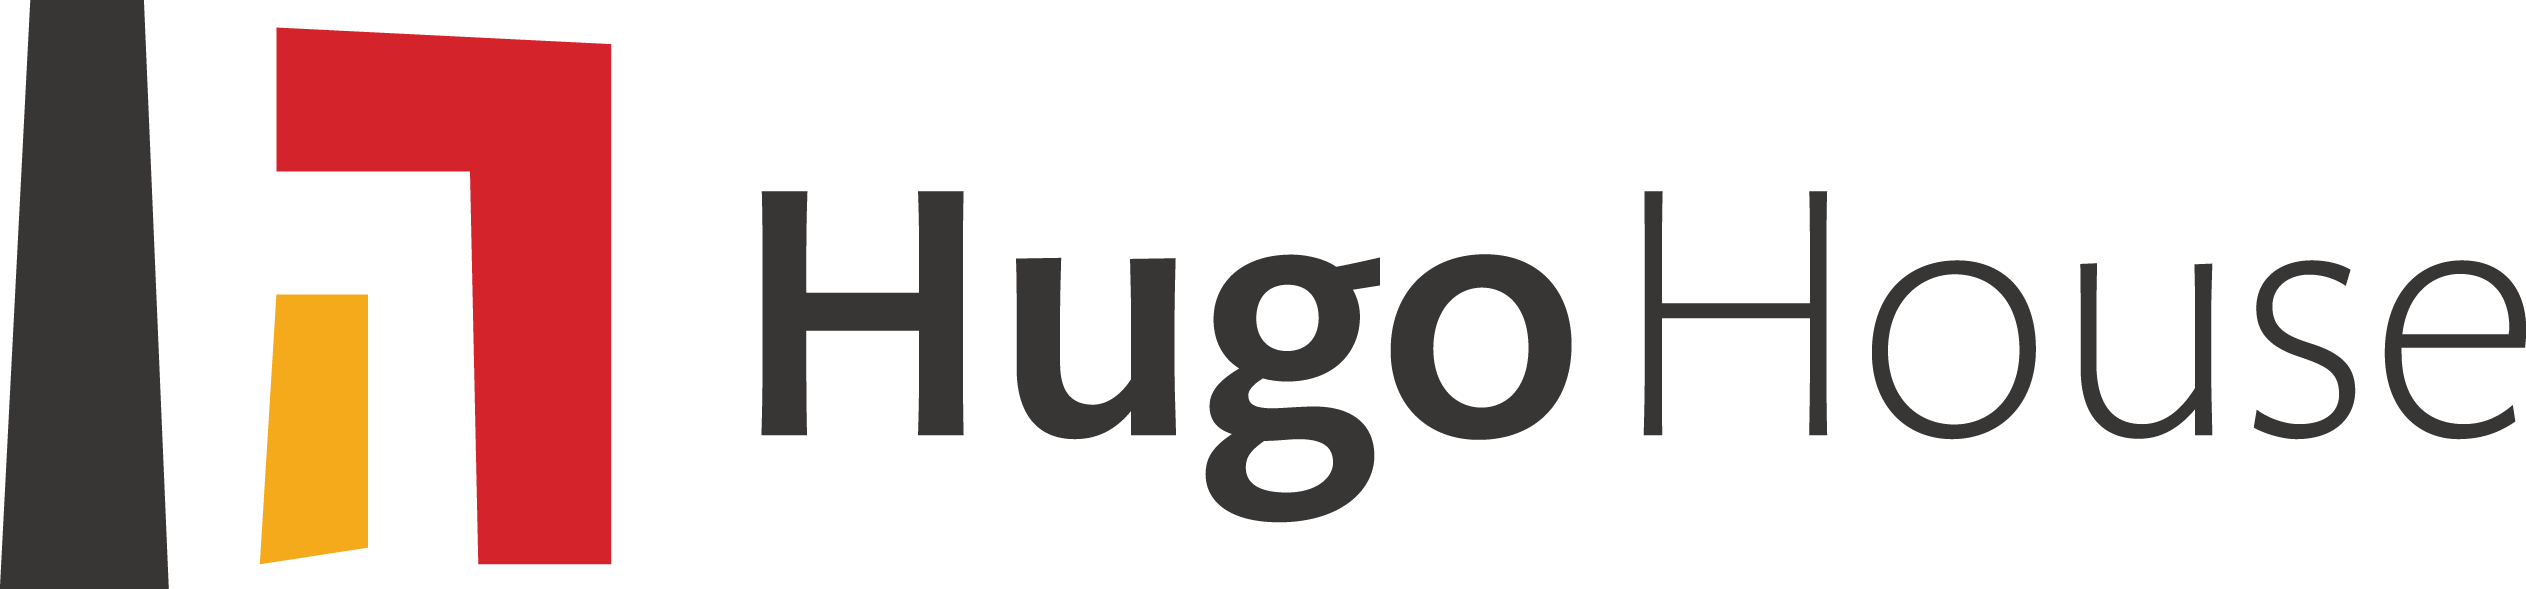 Hugohouse Logo Horizontal Color Rgb